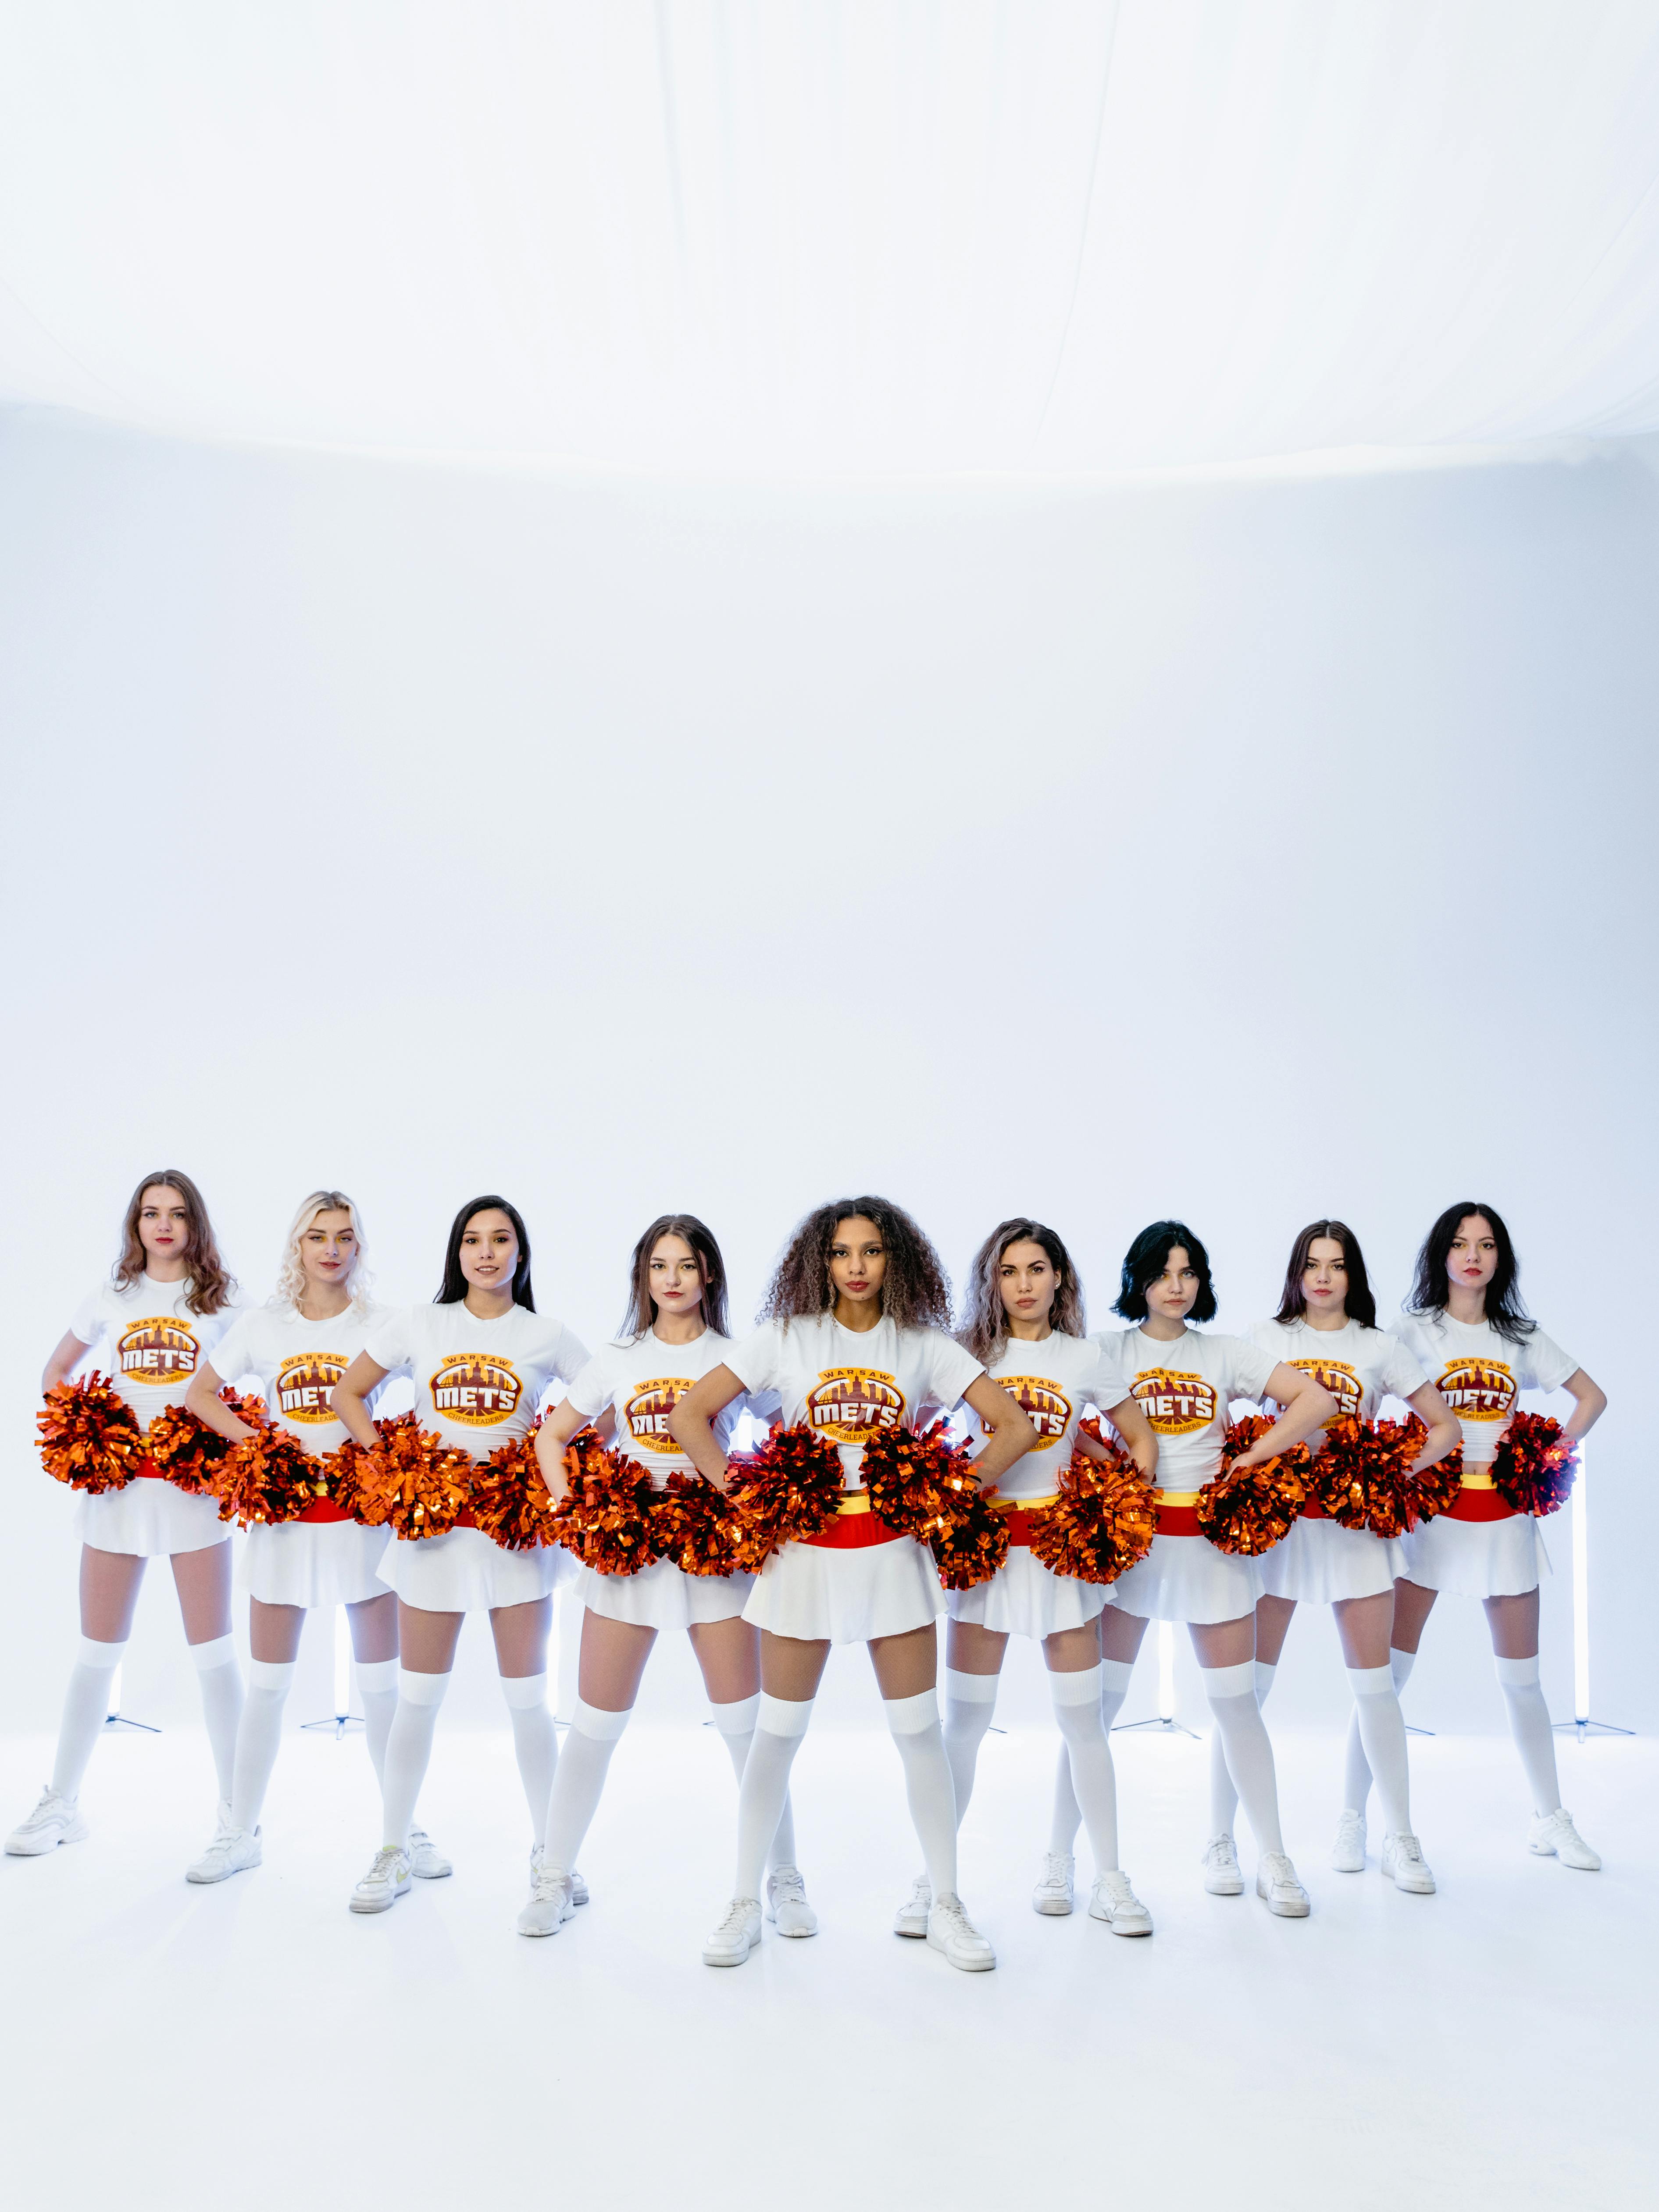 441+ Best Free Cheerleaders Stock Photos & Images · 100% Royalty-Free ...